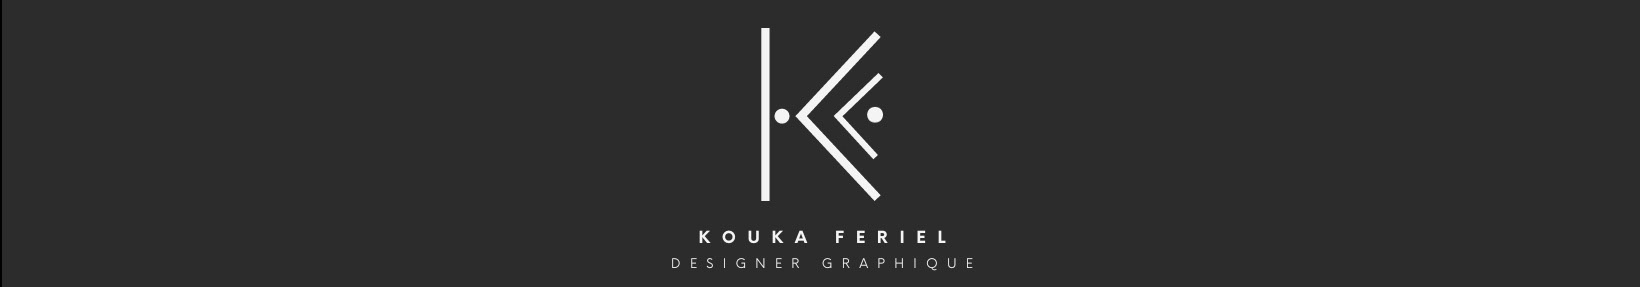 feriel kouka's profile banner